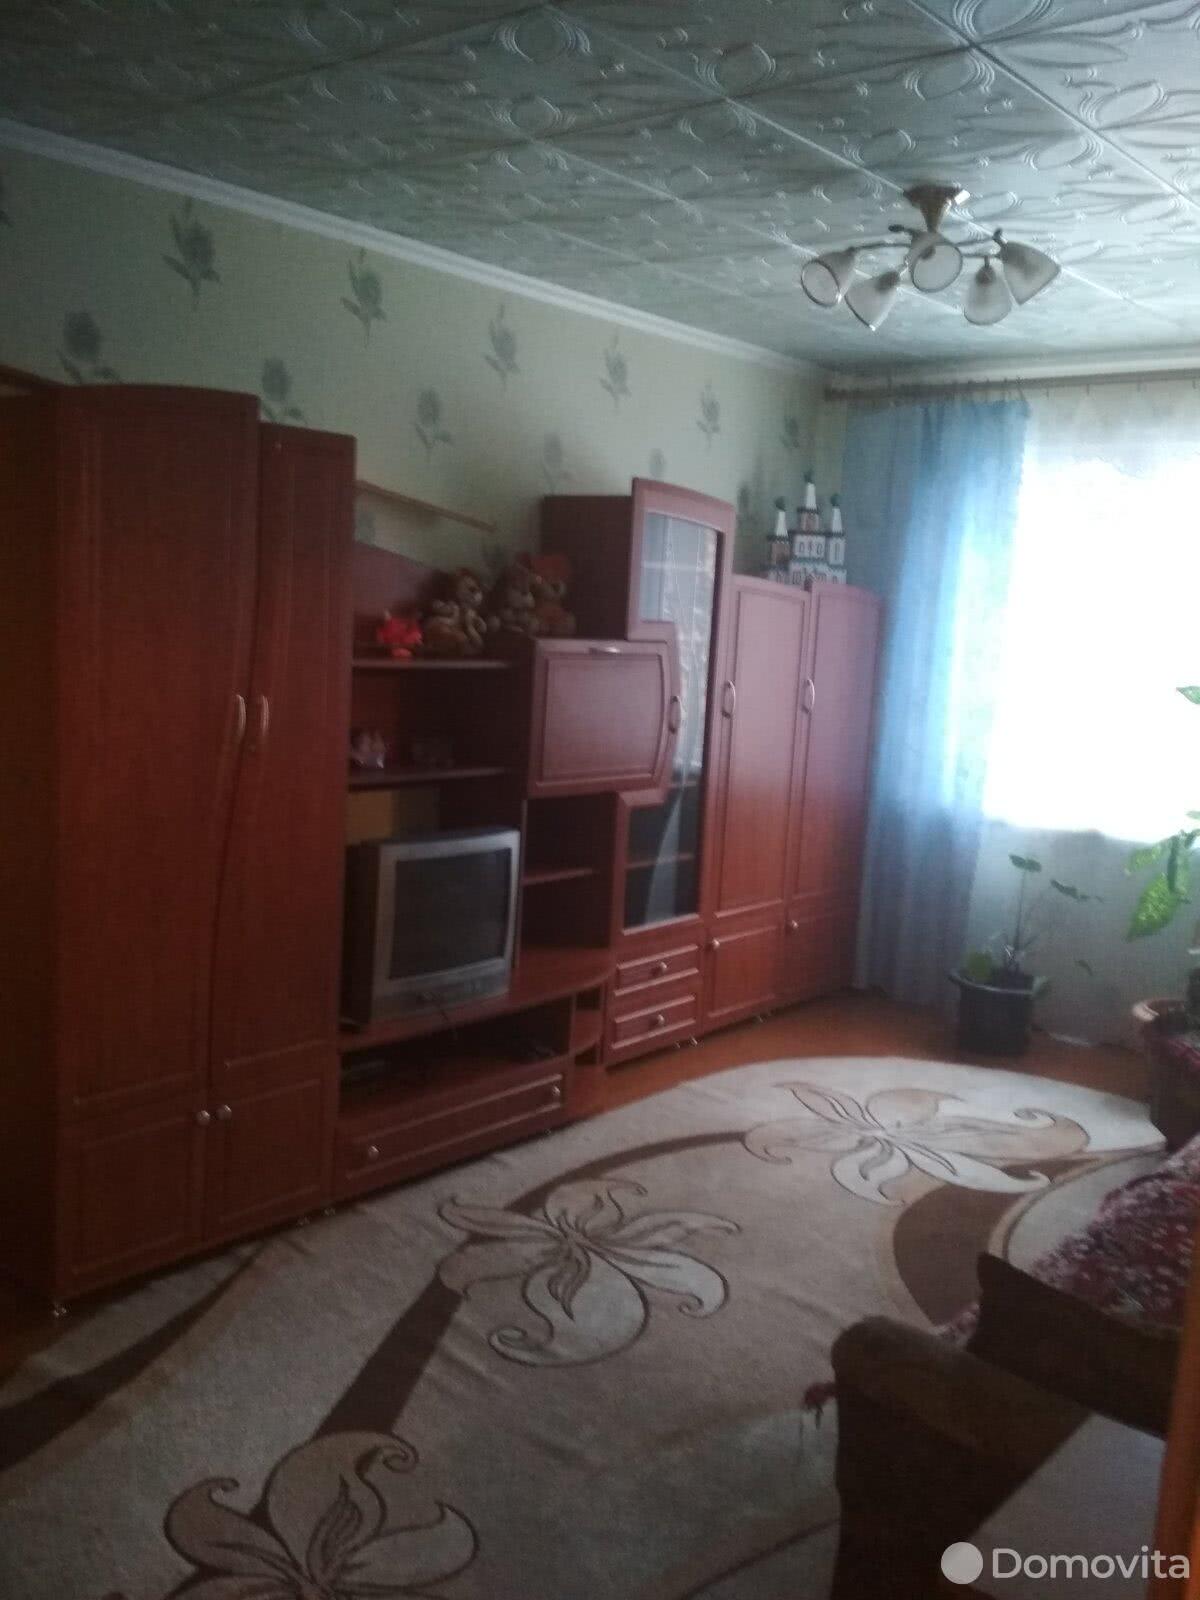 комната, Минск, ул. Ландера, д. 46, стоимость аренды 452 р./мес.